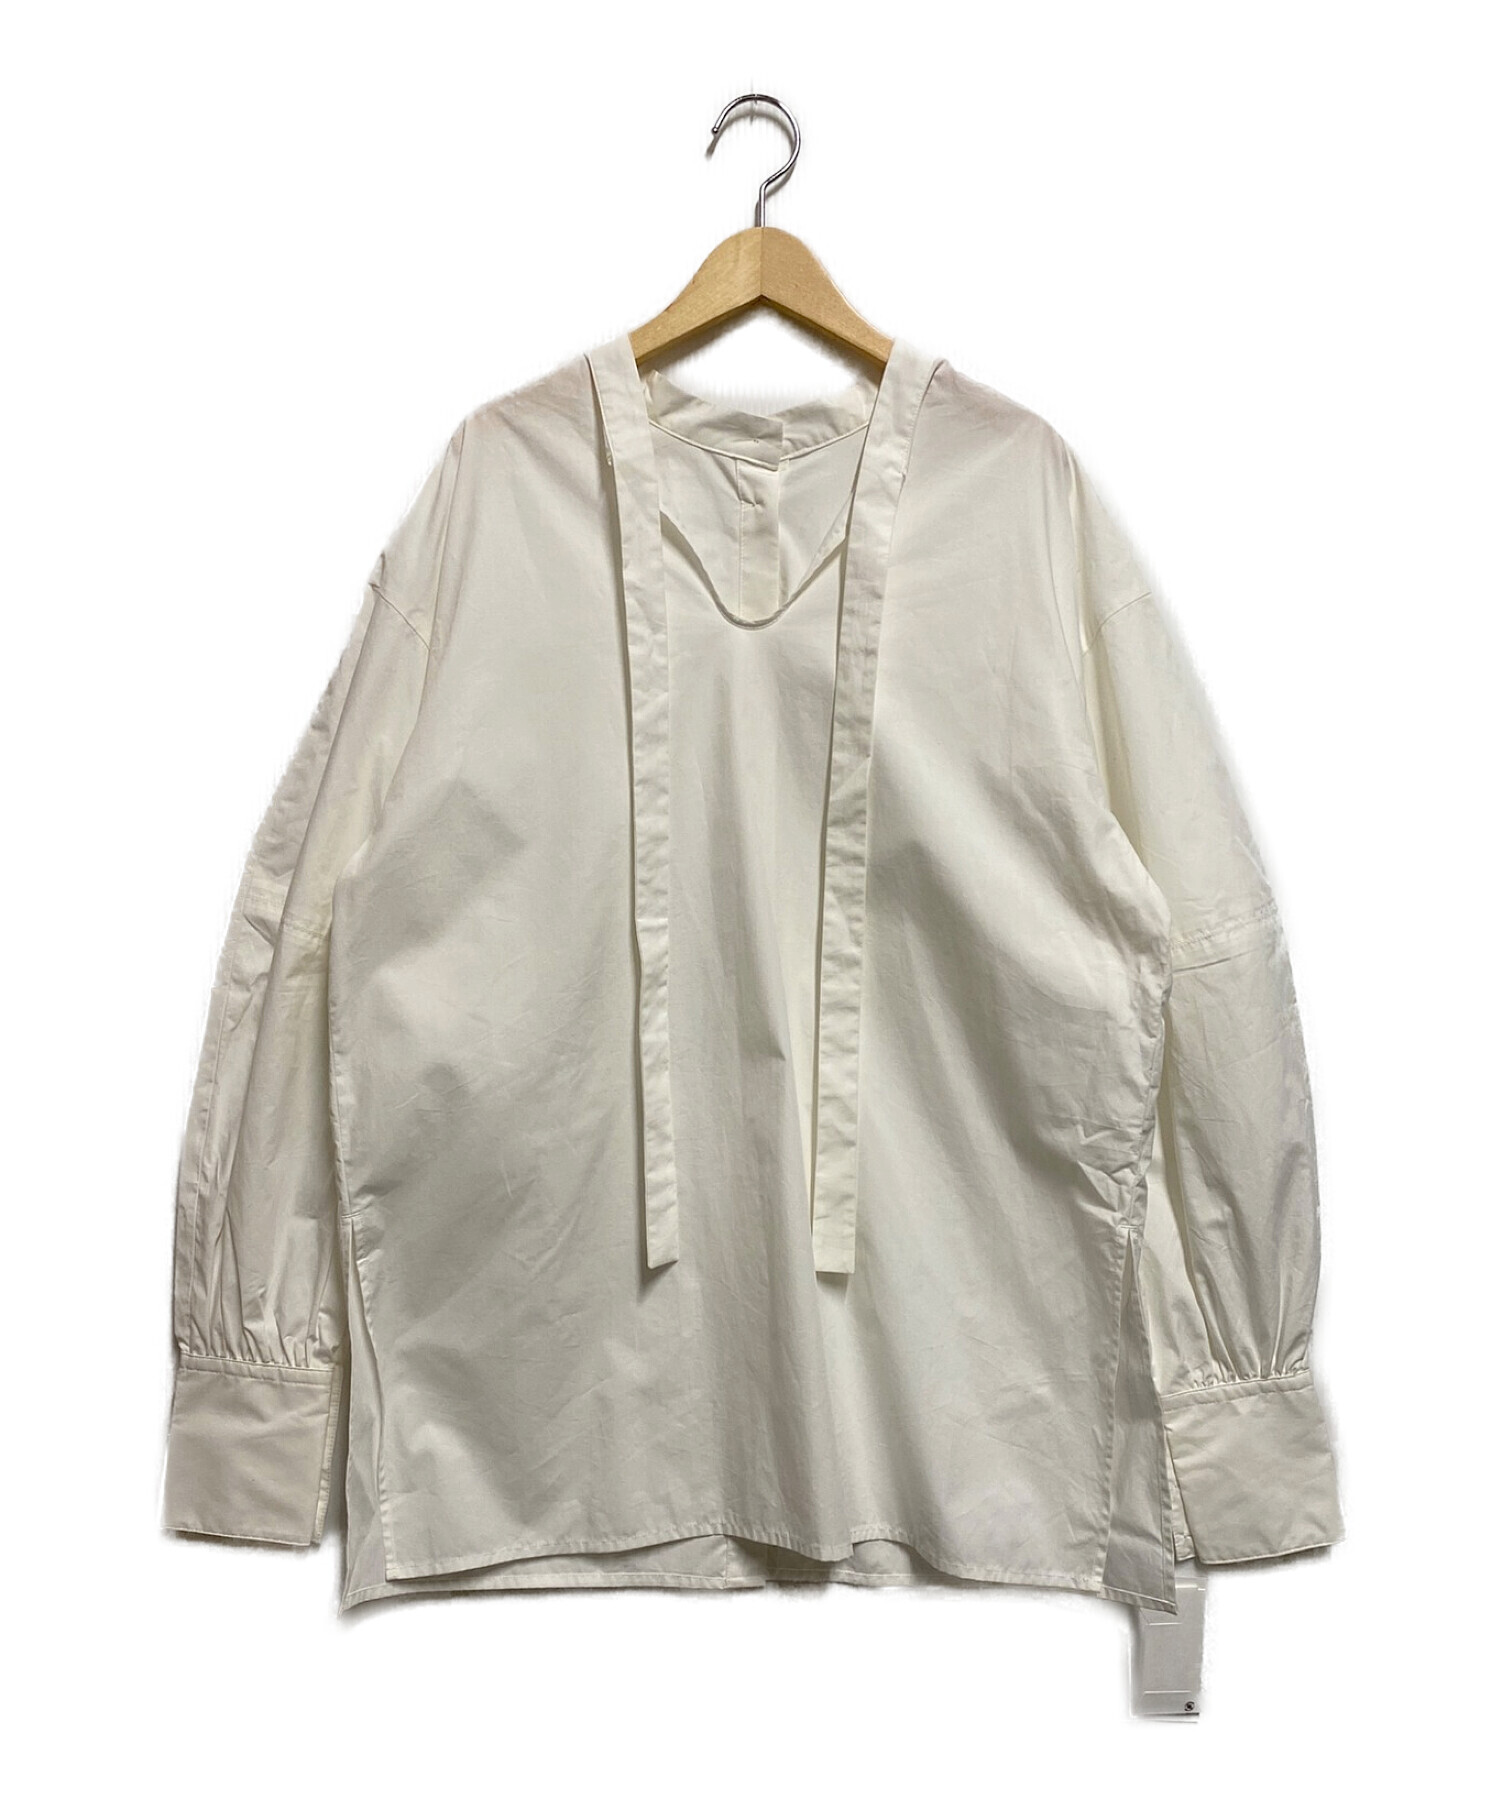 CLANE (クラネ) ダブルフェイスボウタイシャツ ホワイト サイズ:М